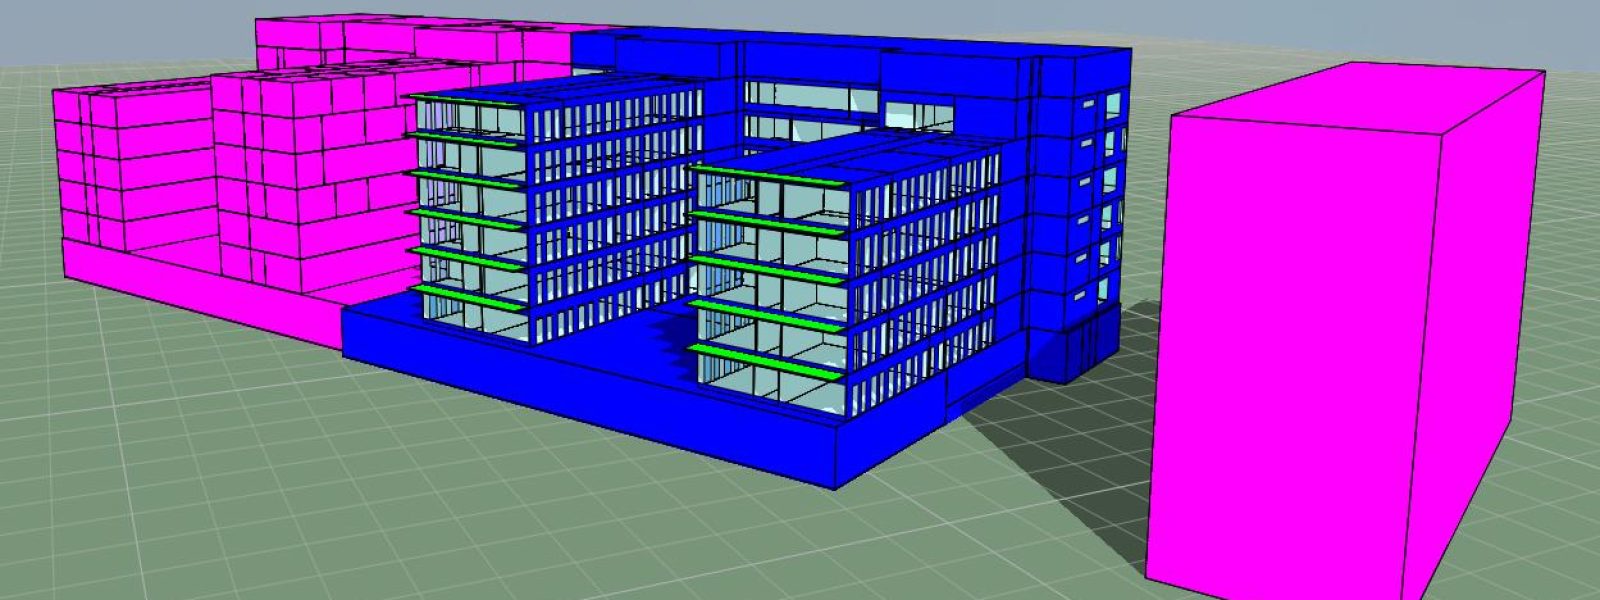 Dock 3.0 Frankfurt, Germany detailed whole building energy simulations